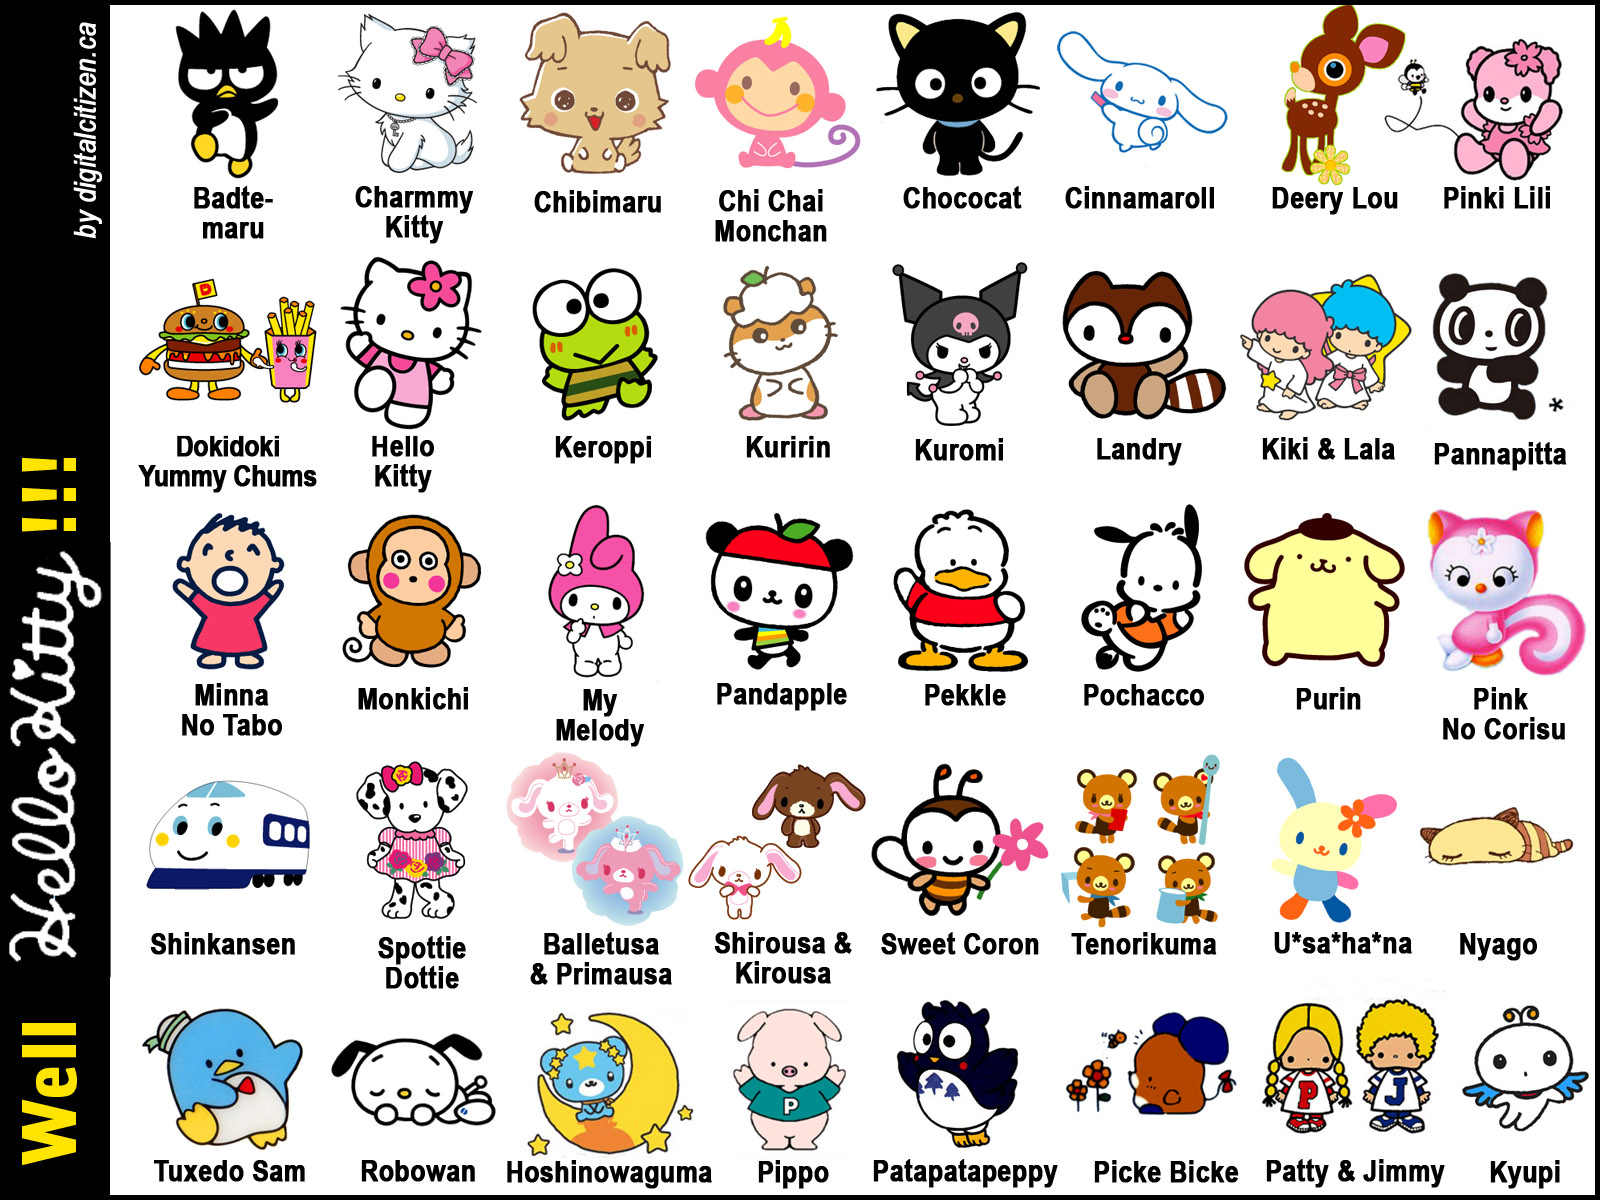 The history of Hello Kitty - Polygon